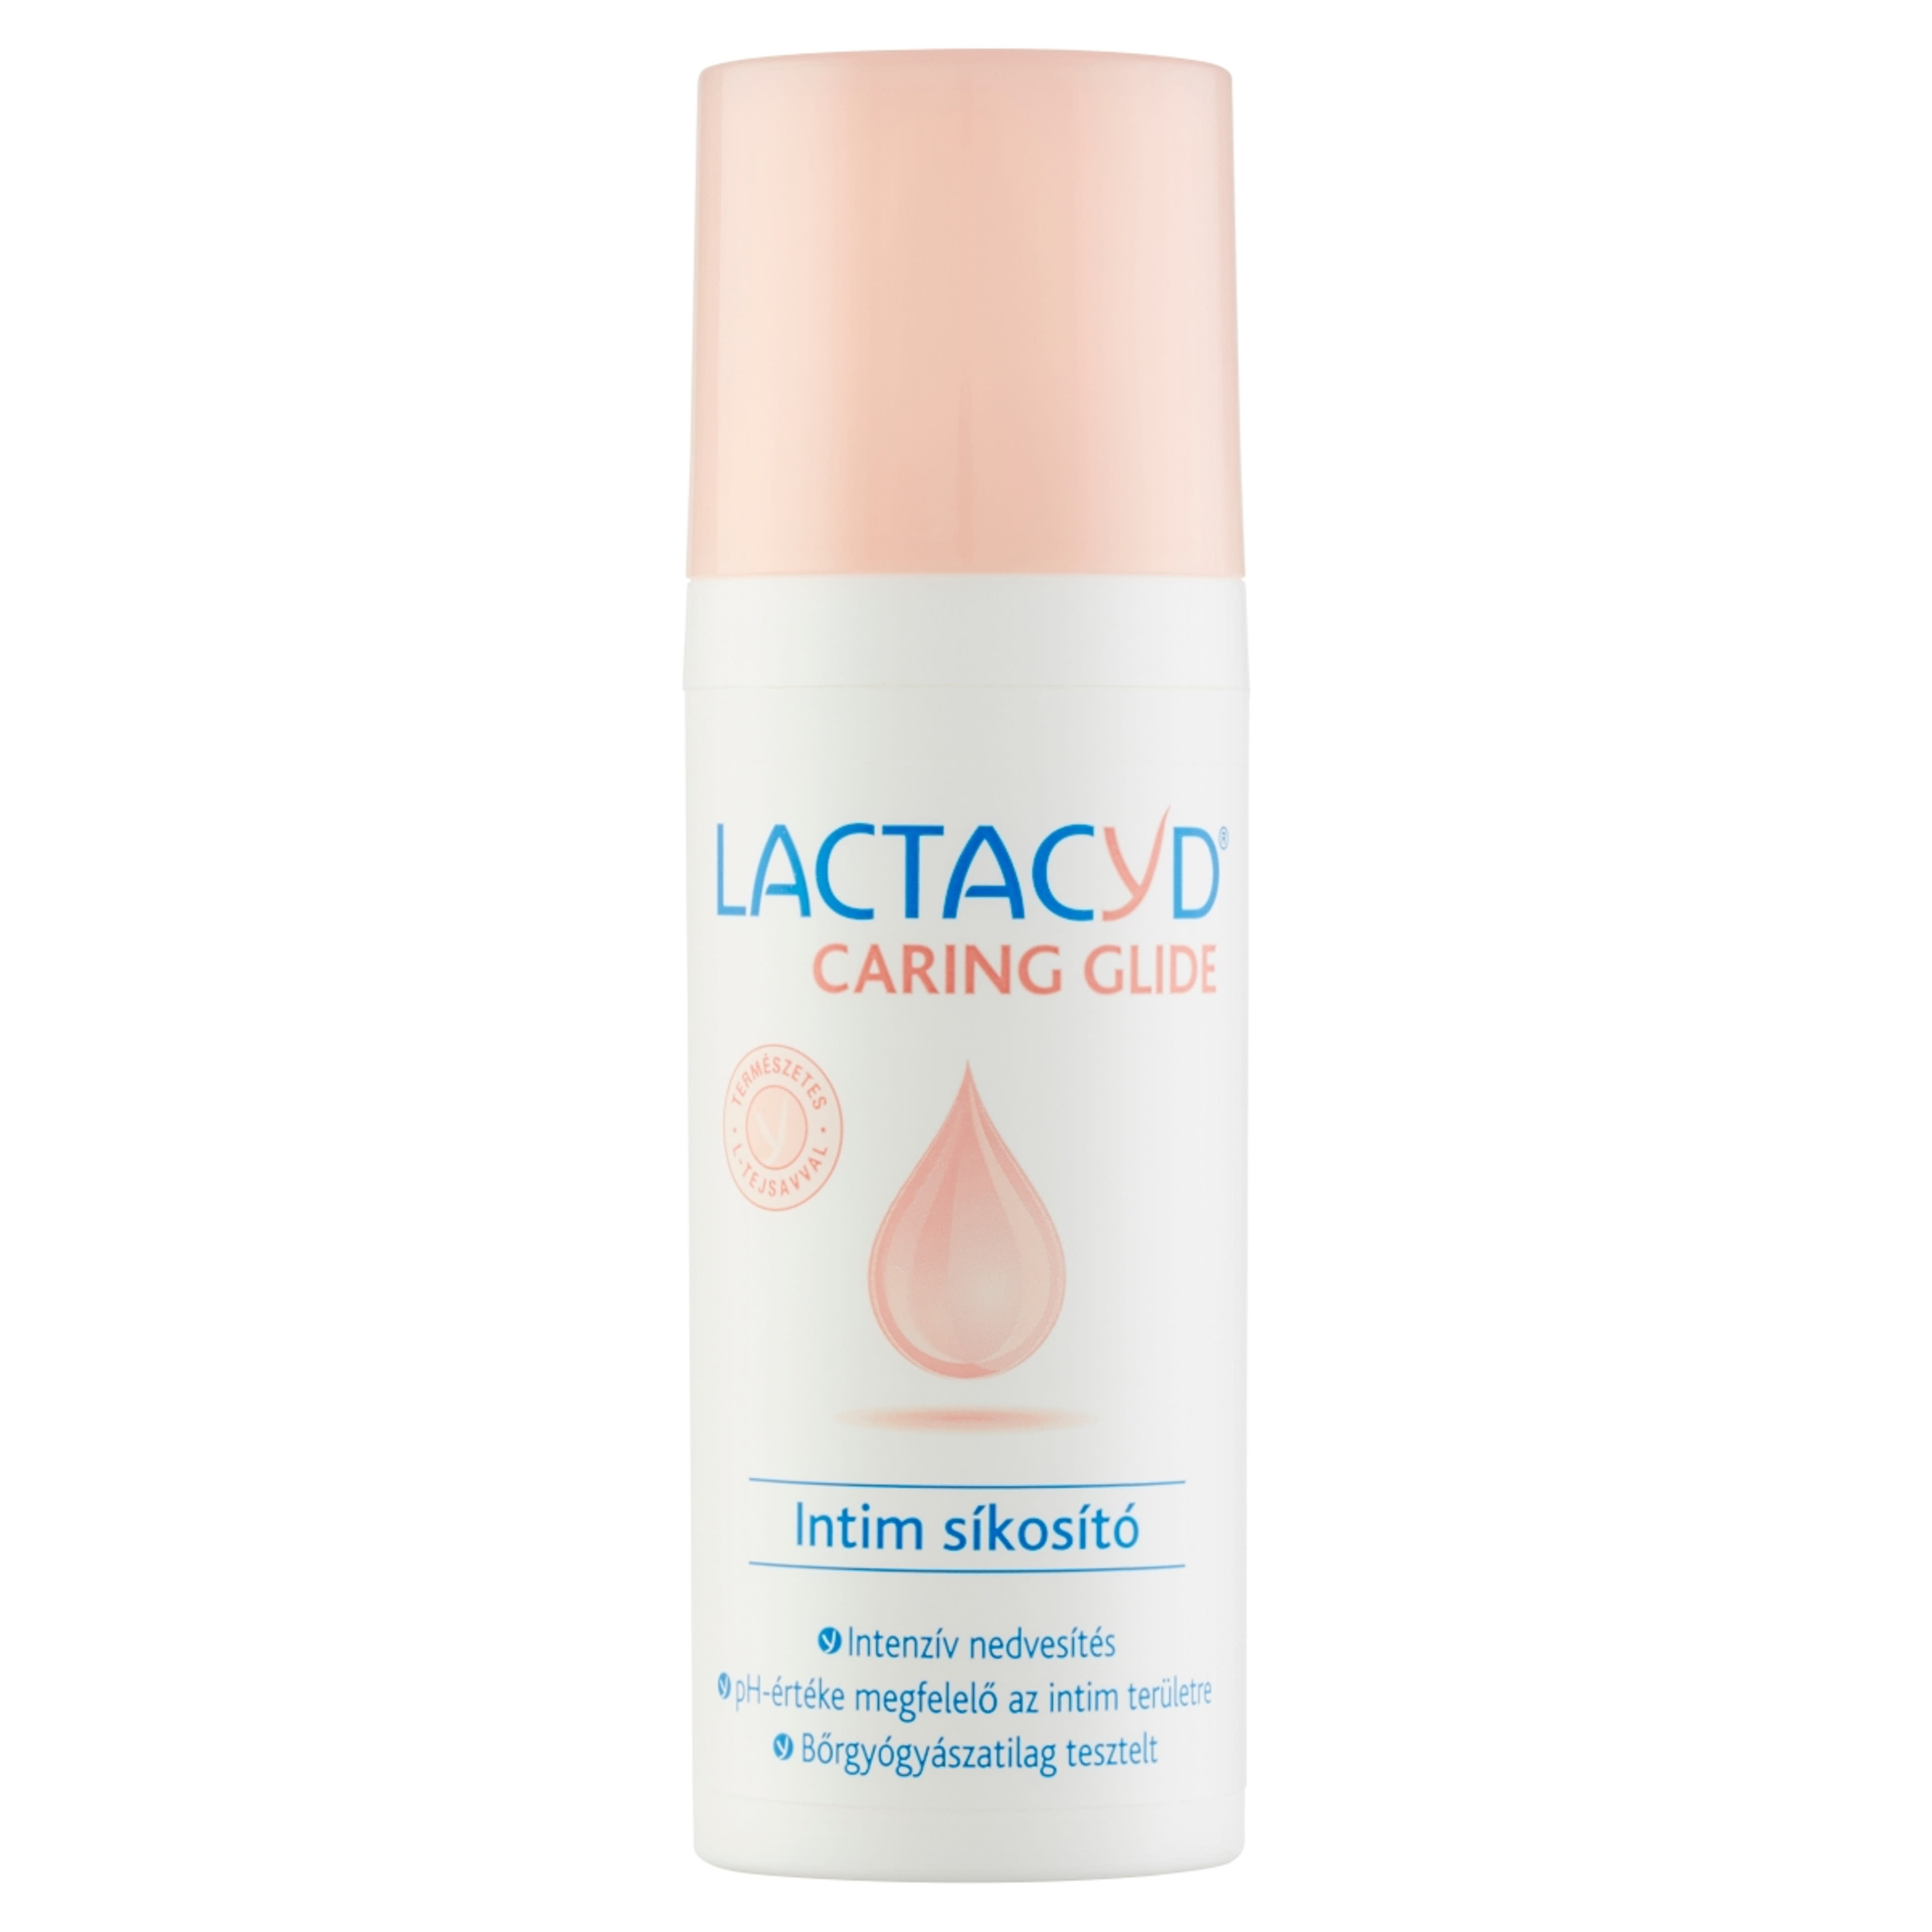 Lactacyd caring glide intim síkosító - 50 ml-1